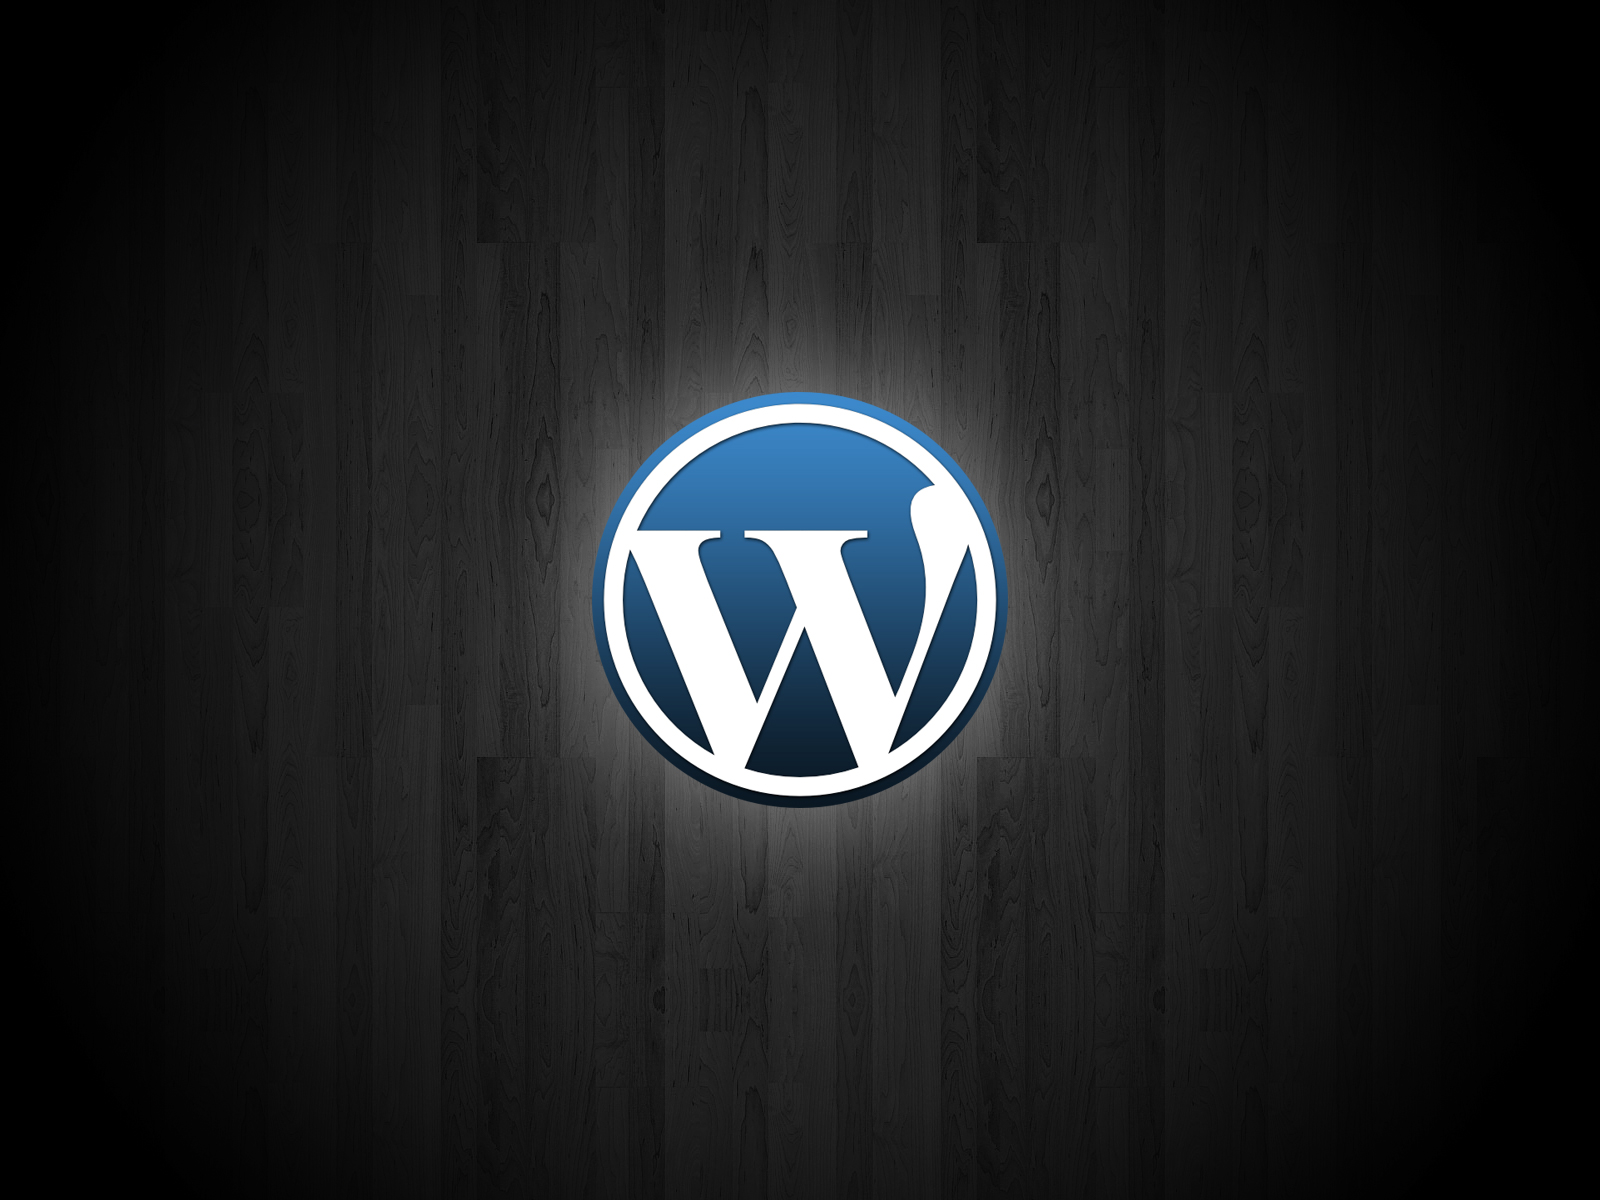 WordPress Development with BrotskyTv